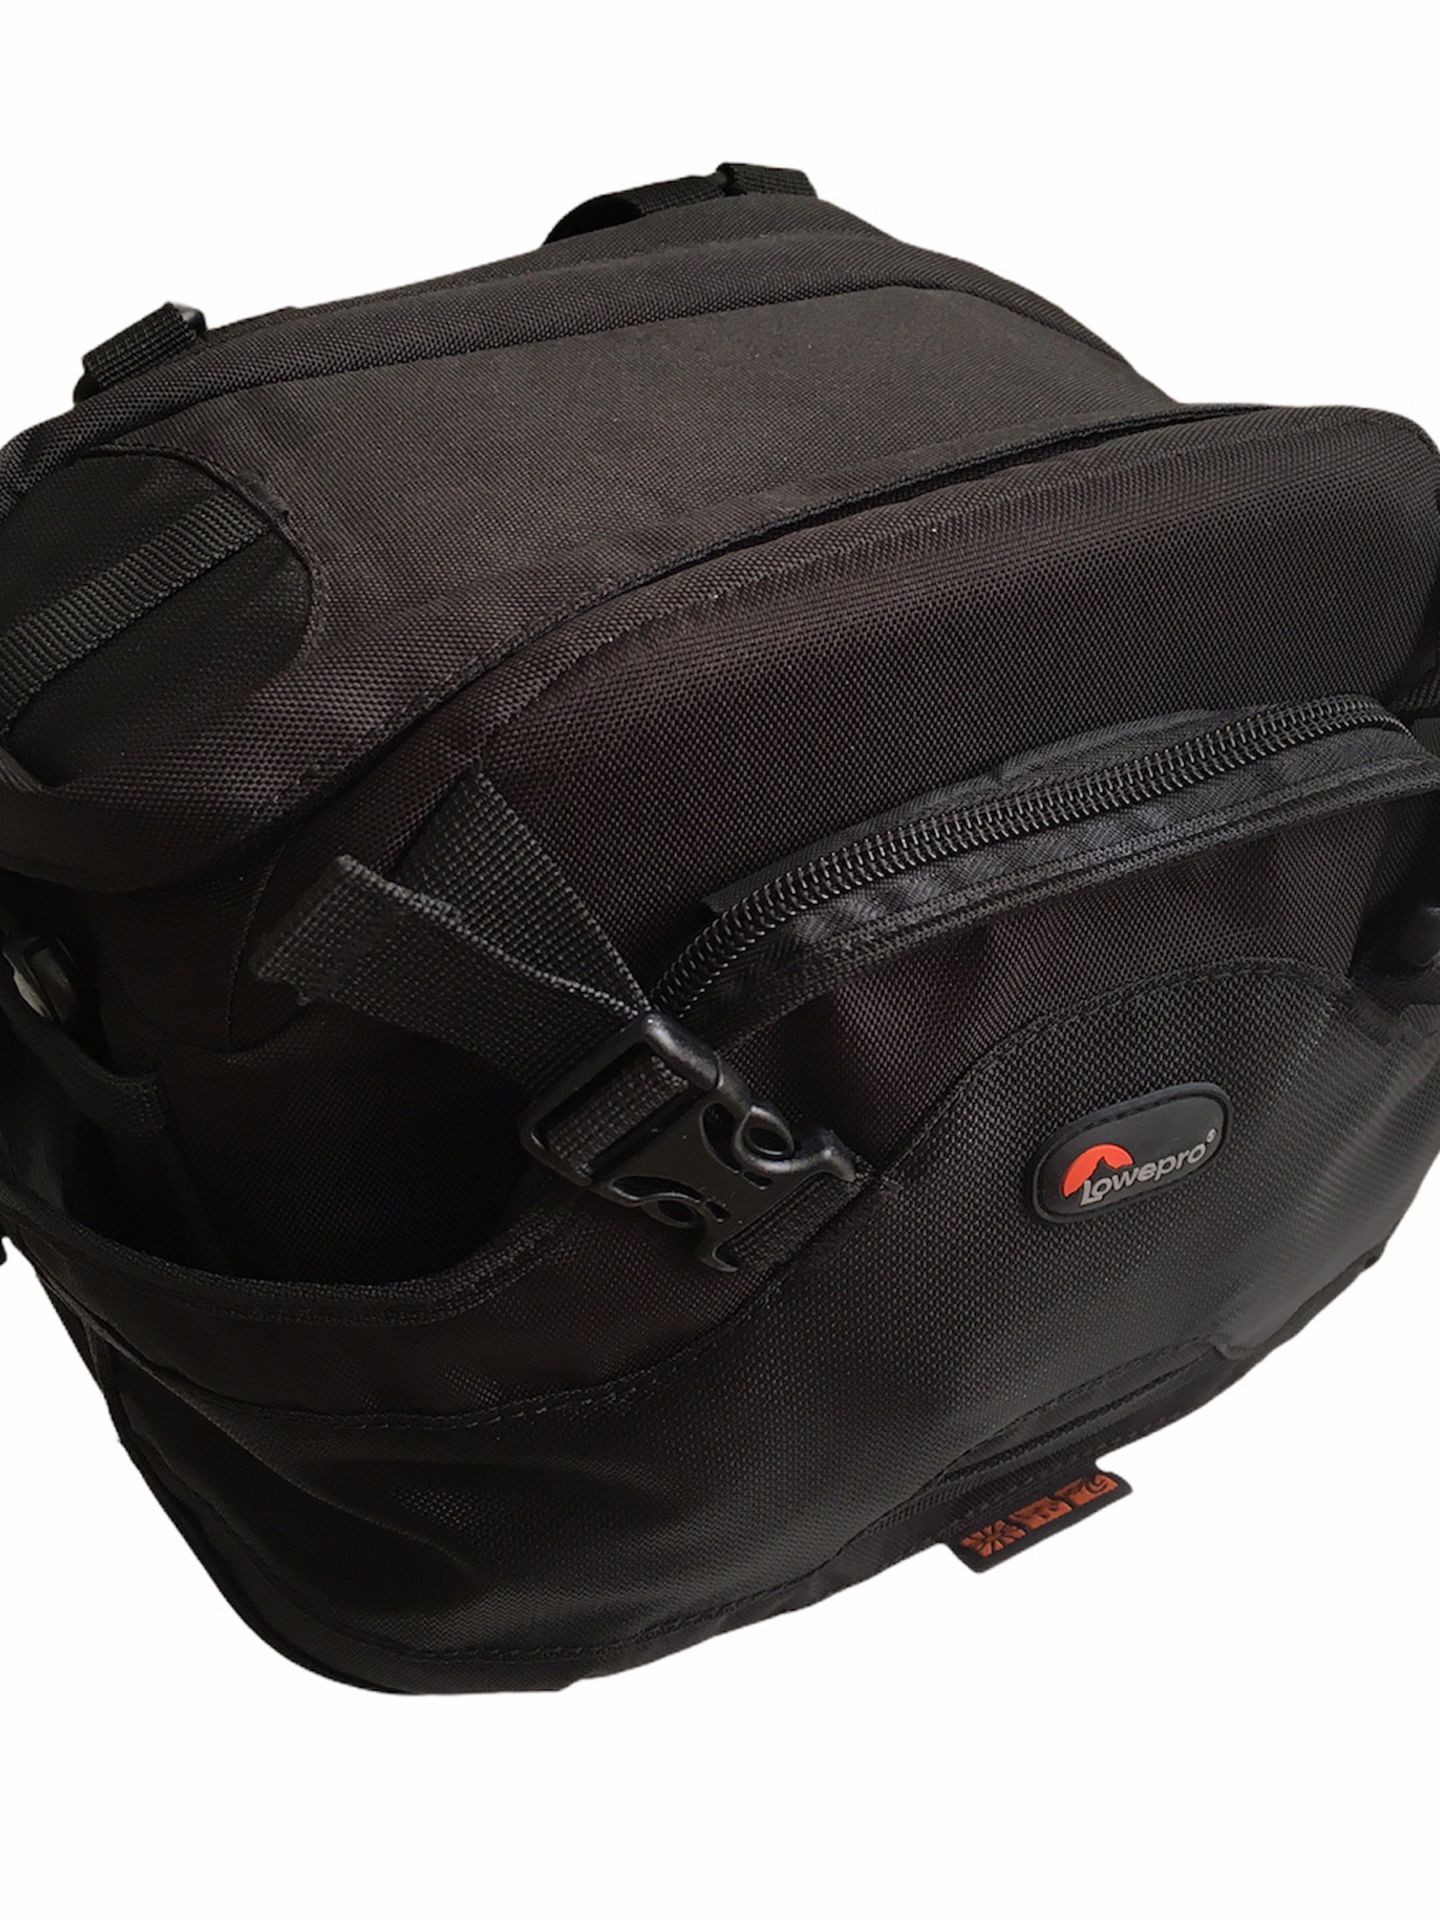 Lowepro Camera Beltpack with Padded Shoulder Strap